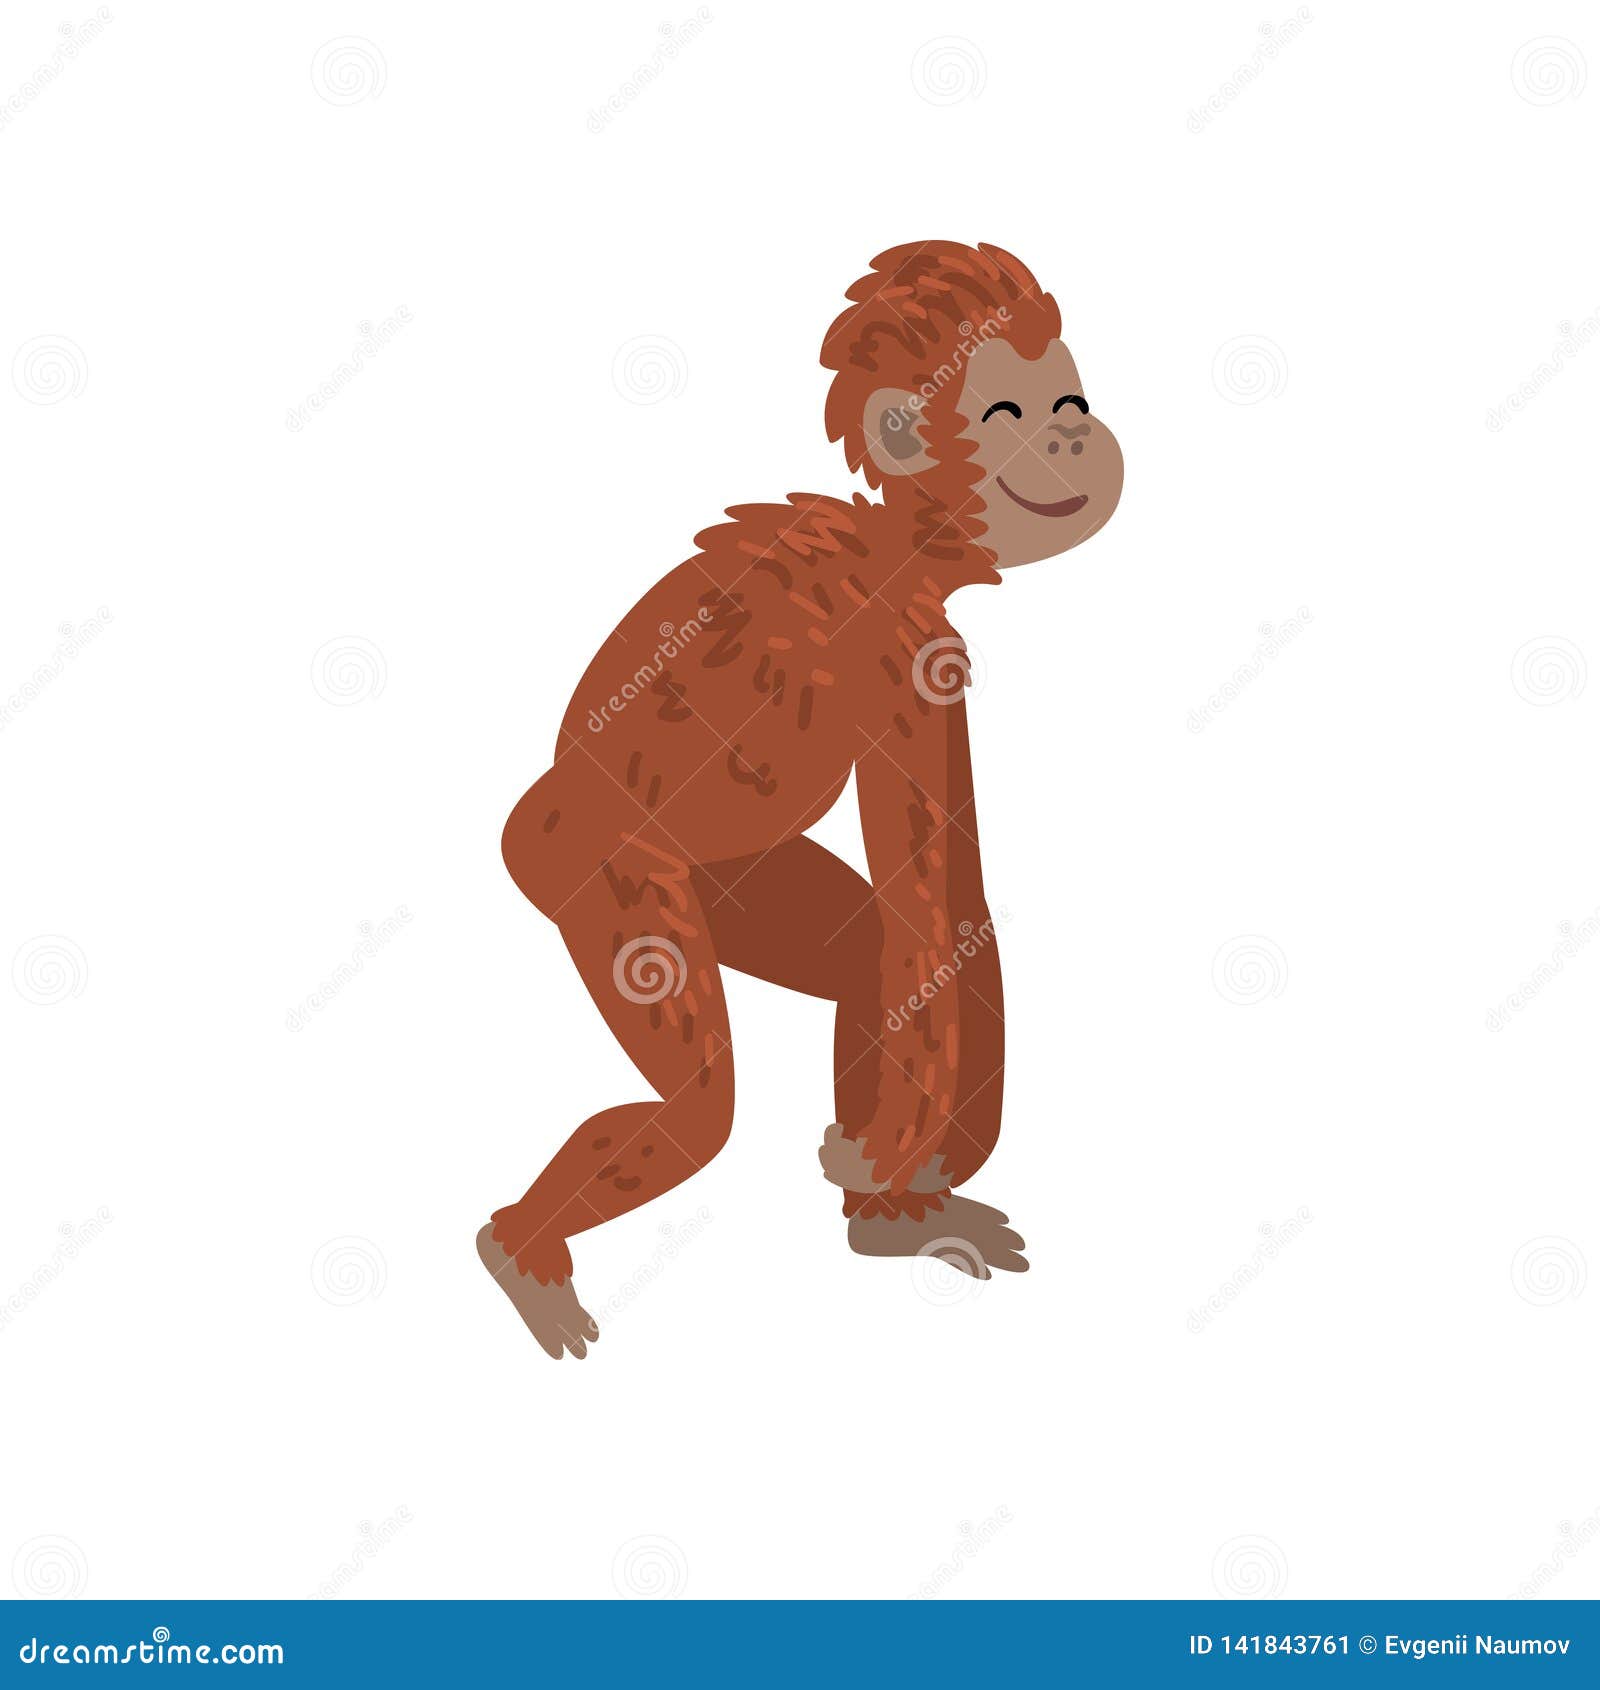 ape, monkey animal progress, biology human evolution stage, evolutionary process of woman  